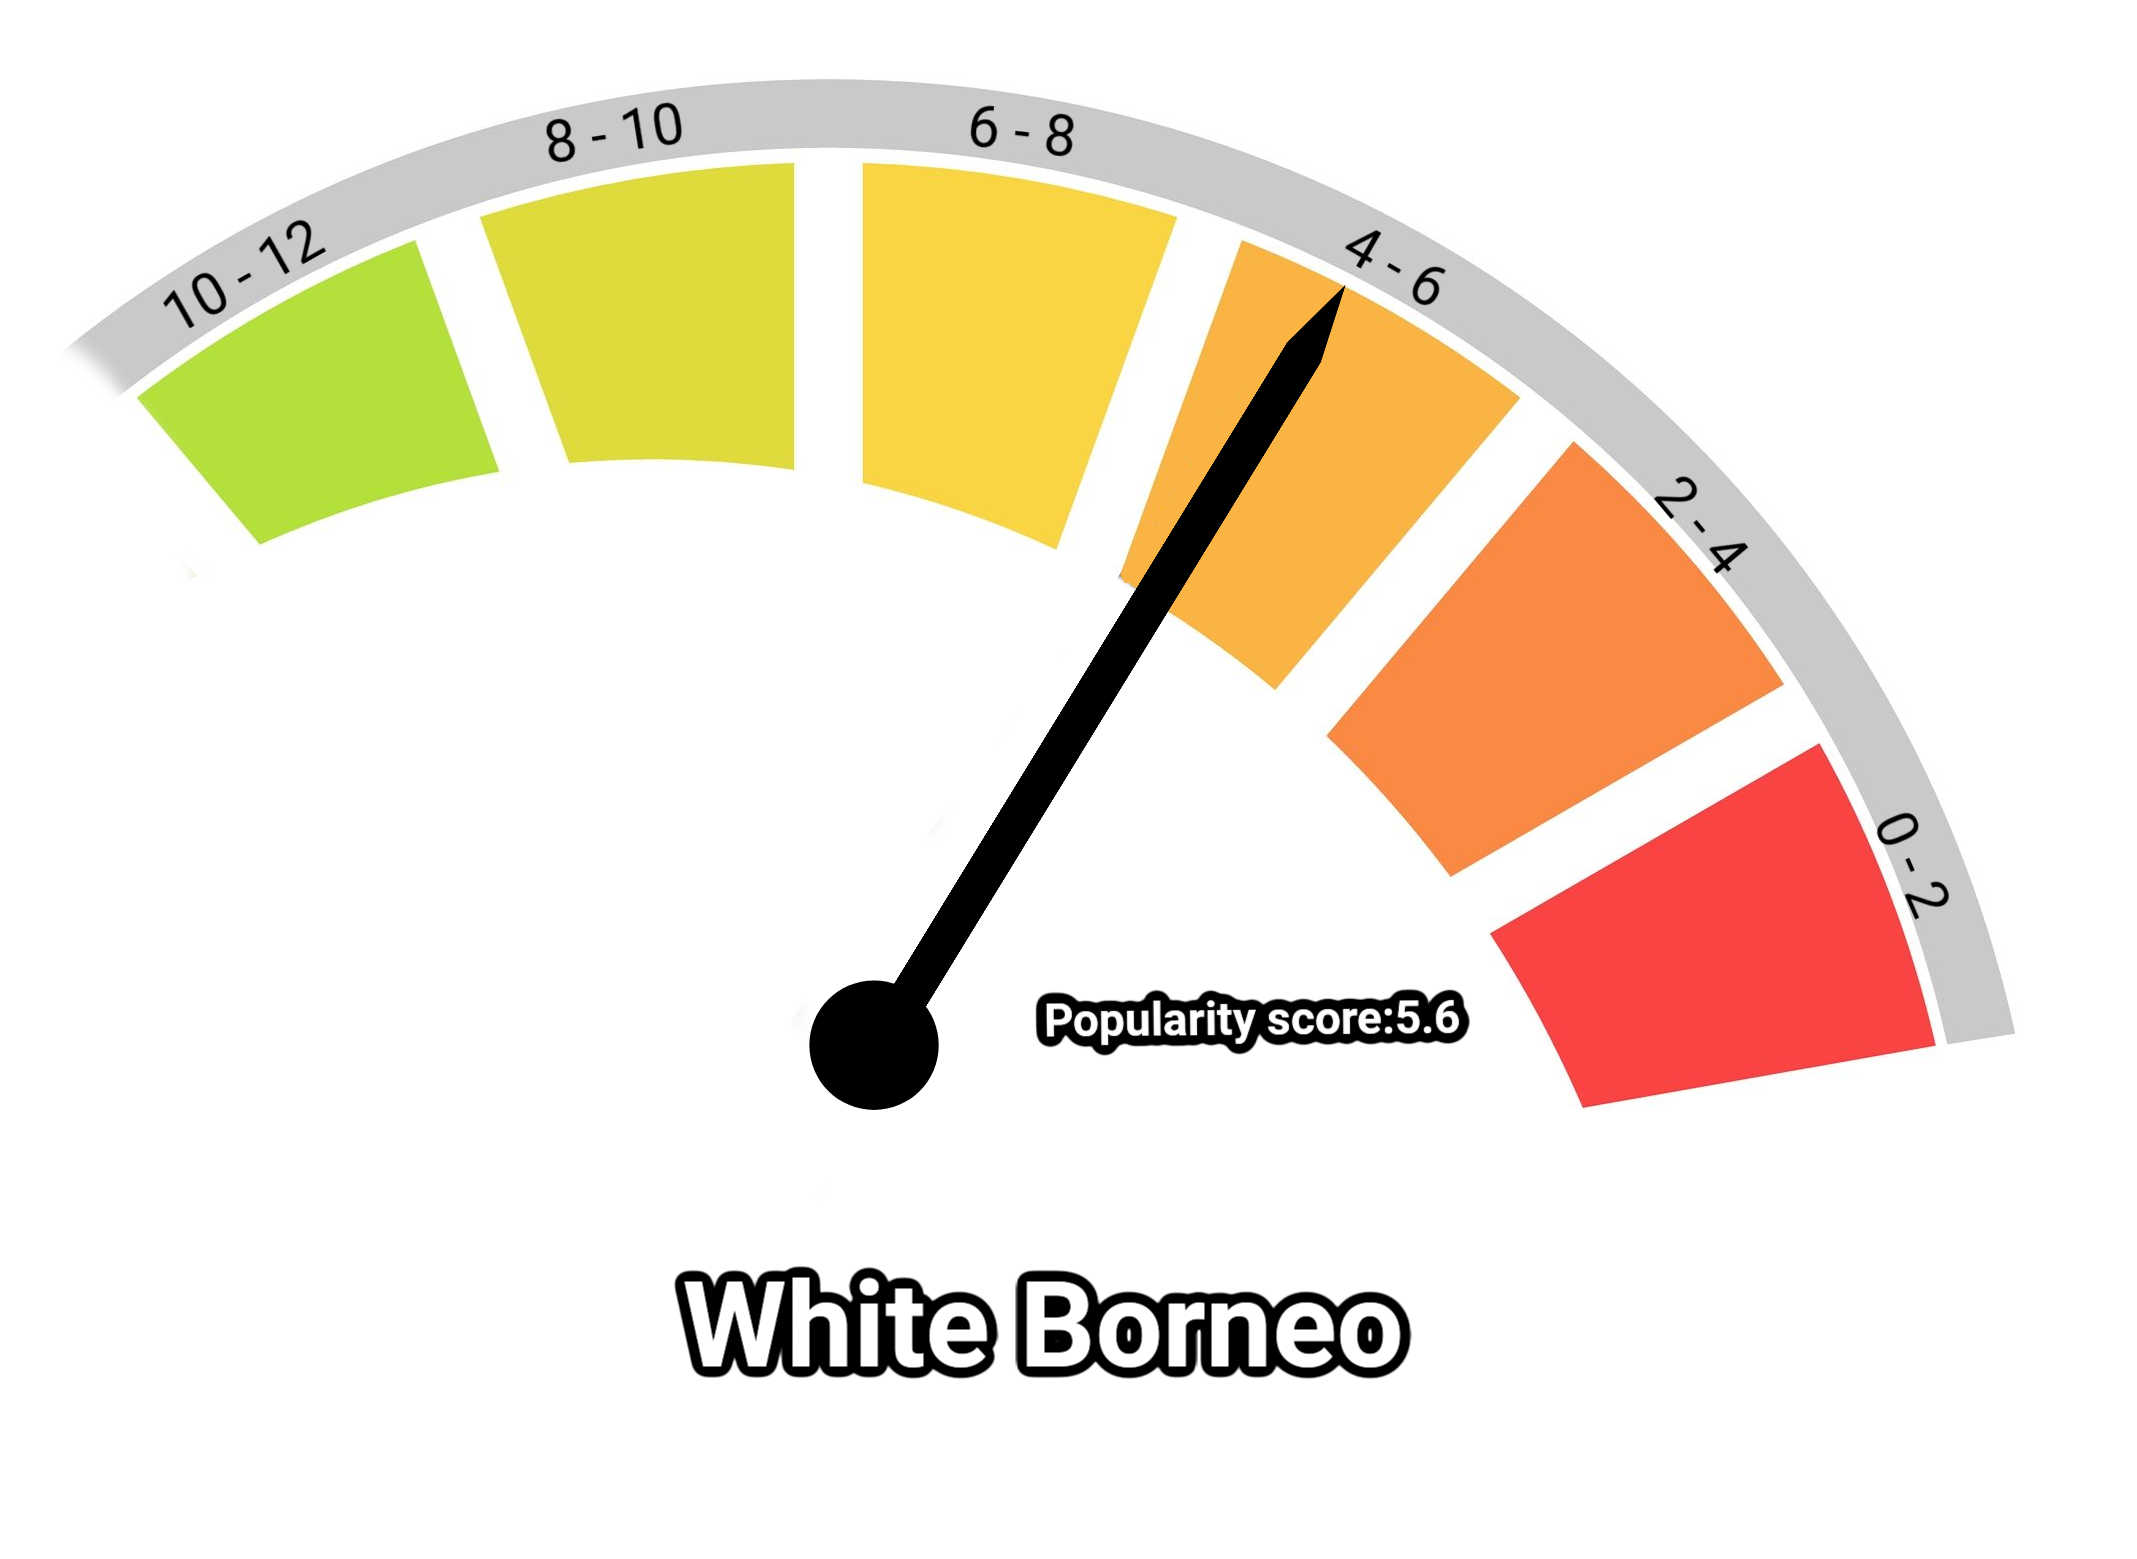 image of white borneo kratom popularity score